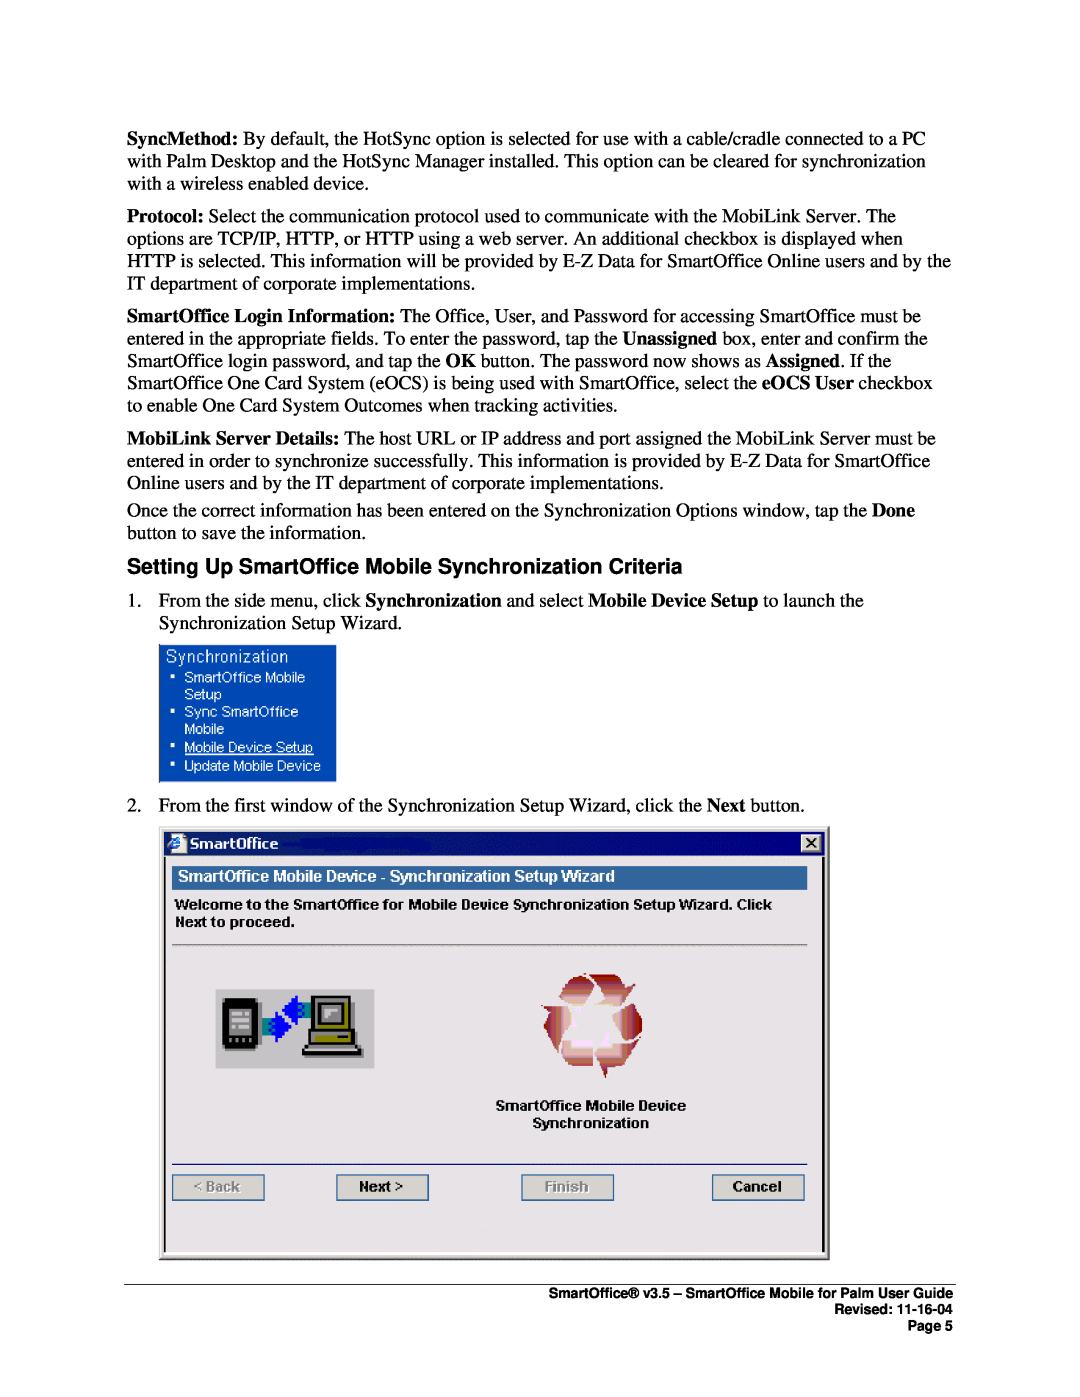 Palm manual Setting Up SmartOffice Mobile Synchronization Criteria 